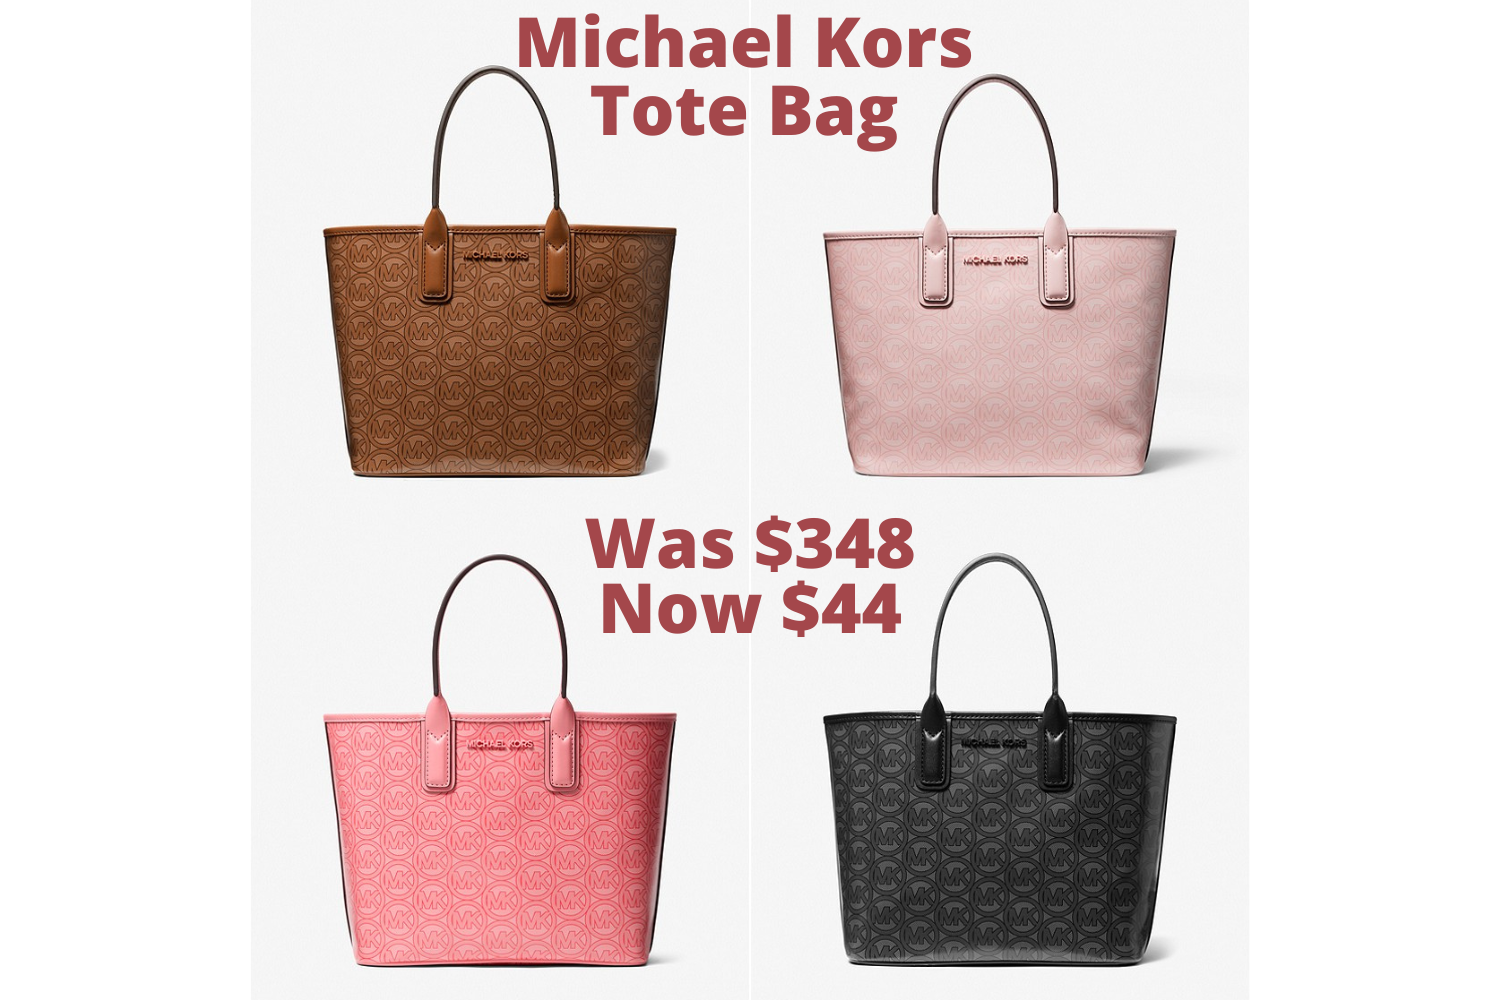 Michael Kors Jacquard Tote Bag only $44.25 (reg $348) - Shop The Style